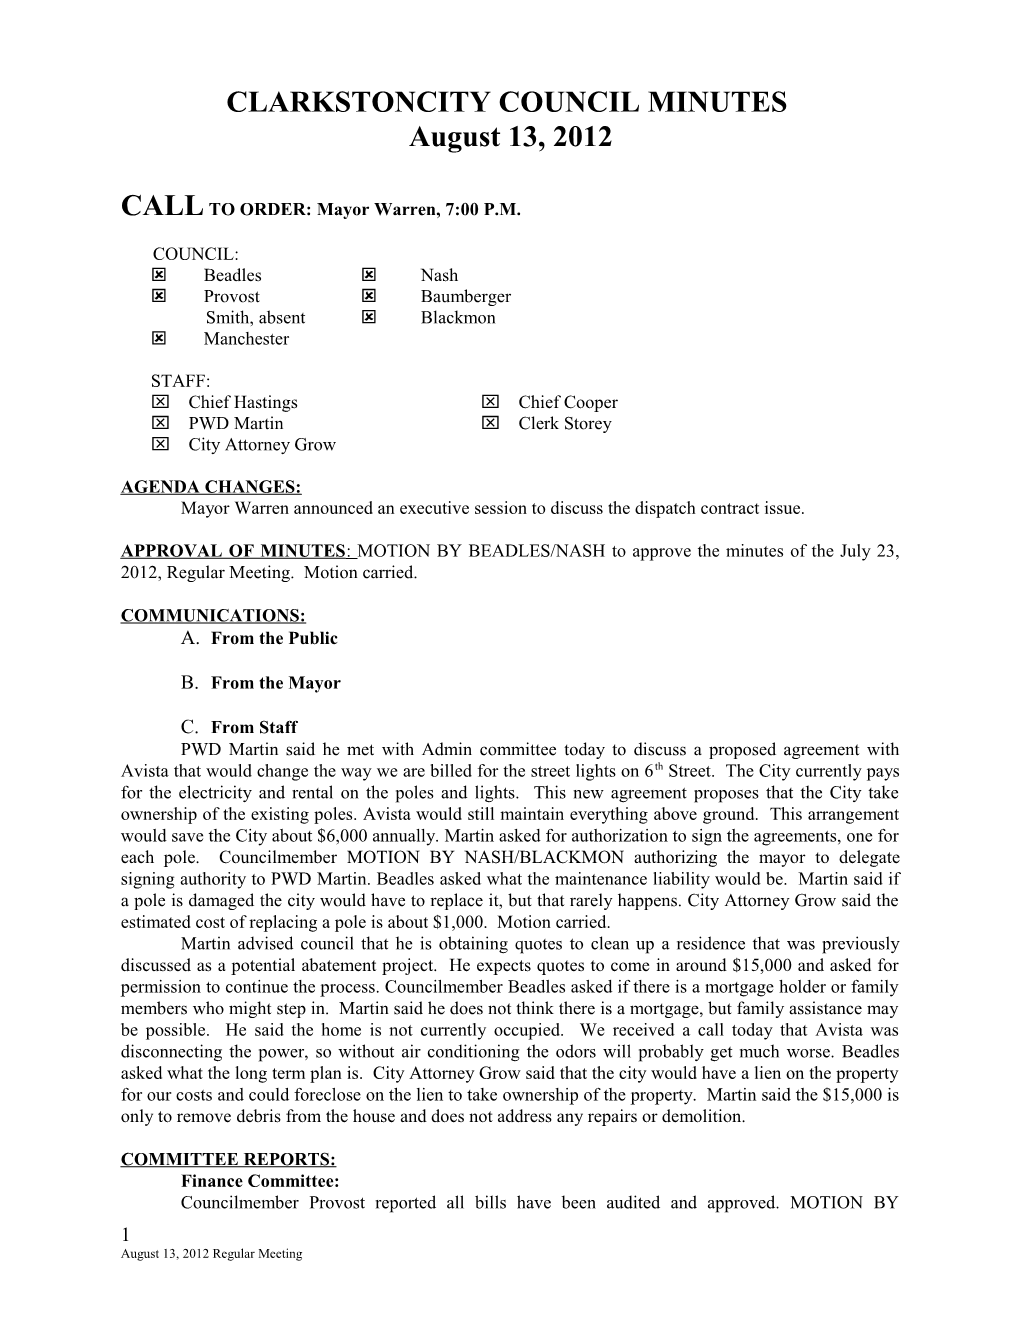 Clarkstoncity Council Minutes